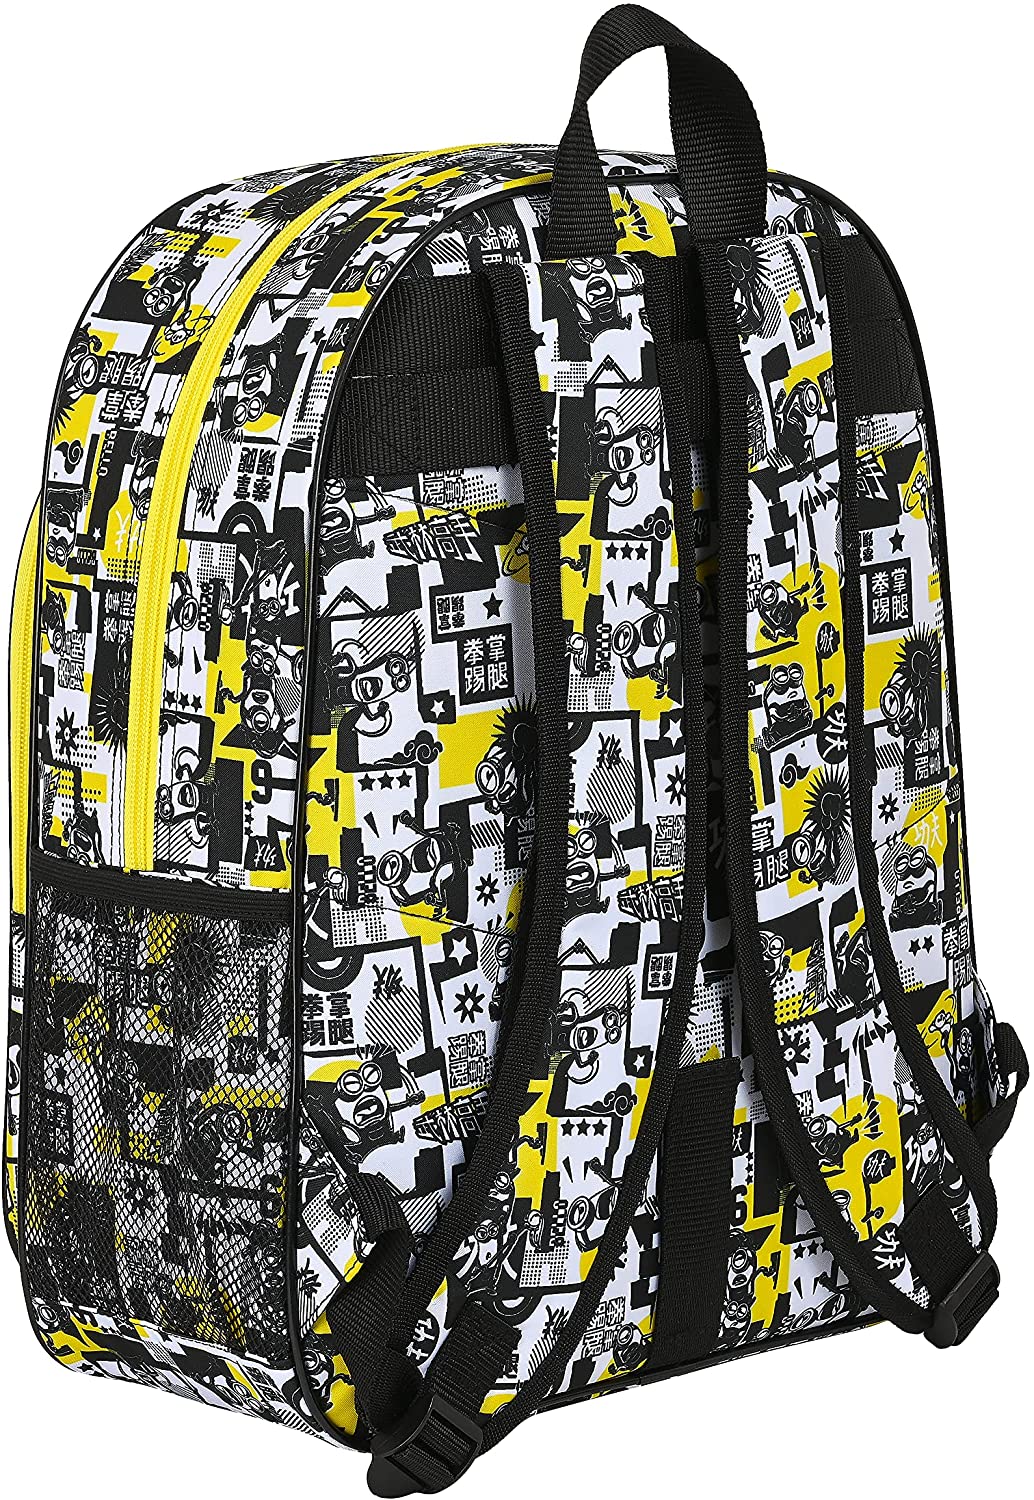 safta Boys' M180 Children's School Backpack, White/Black/Yellow, 330x140x420 mm